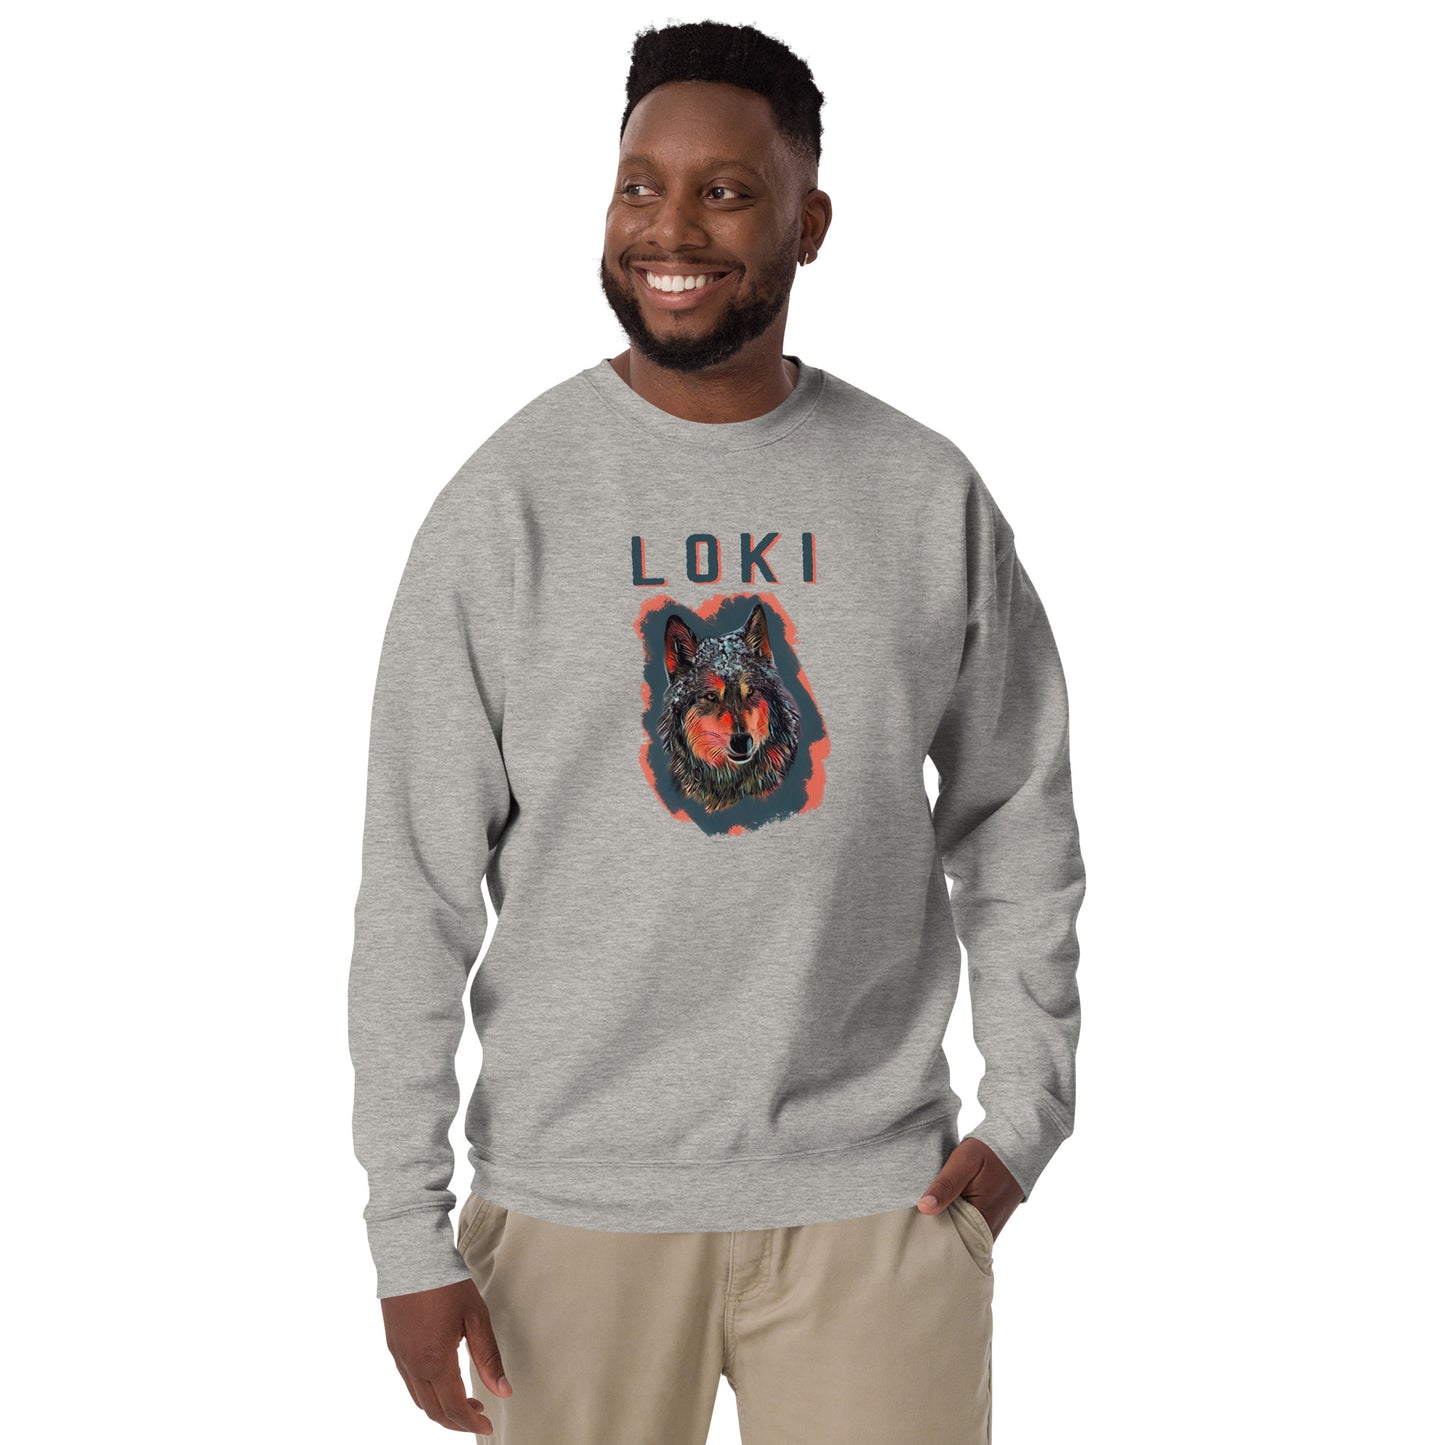 Loki Unisex Premium Sweatshirt